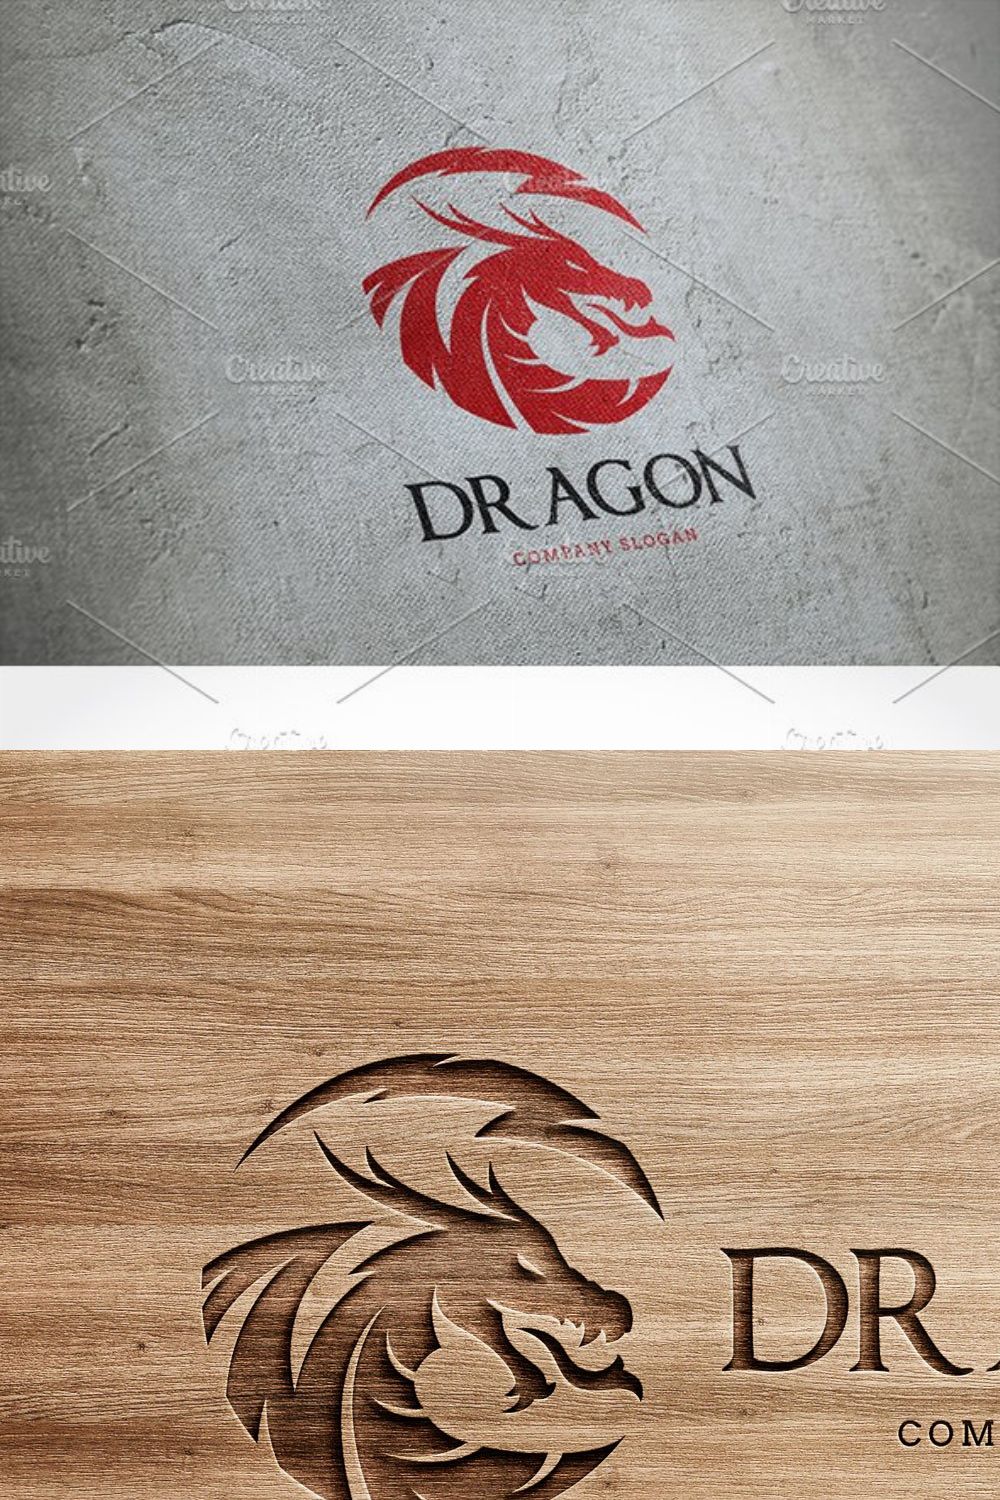 Dragon pinterest preview image.